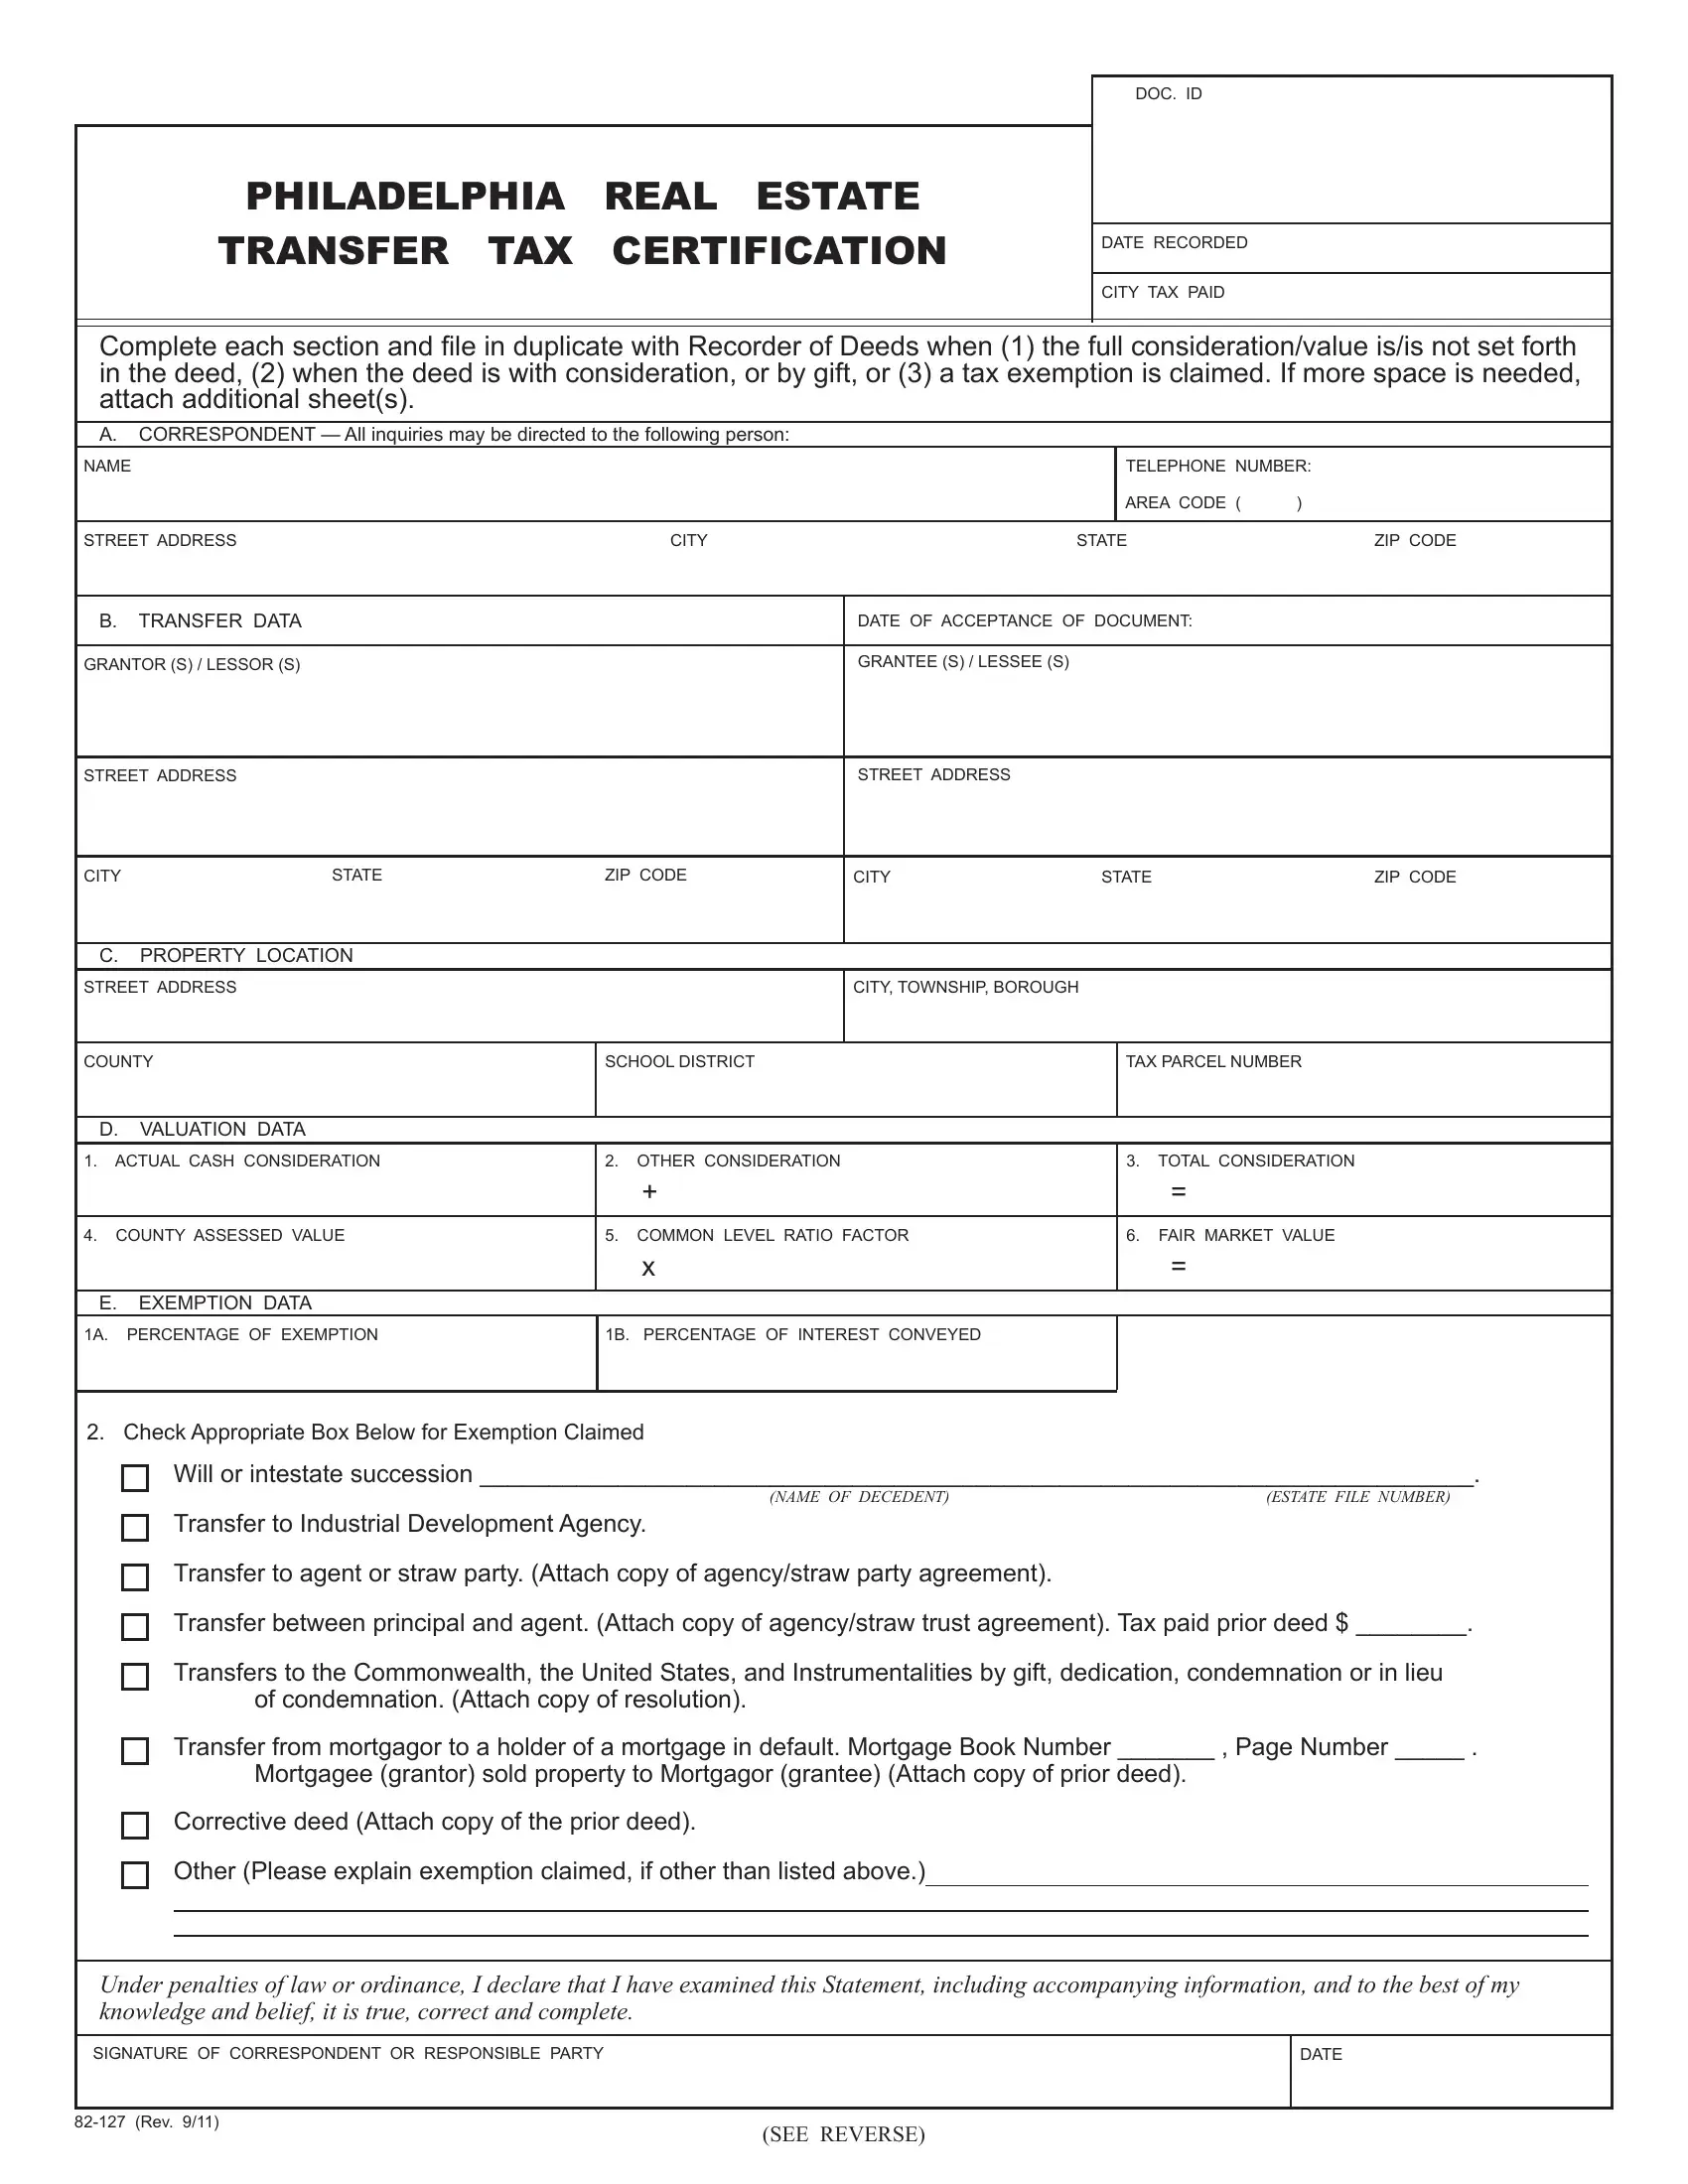 Philadelphia Form Transfer Tax Preview